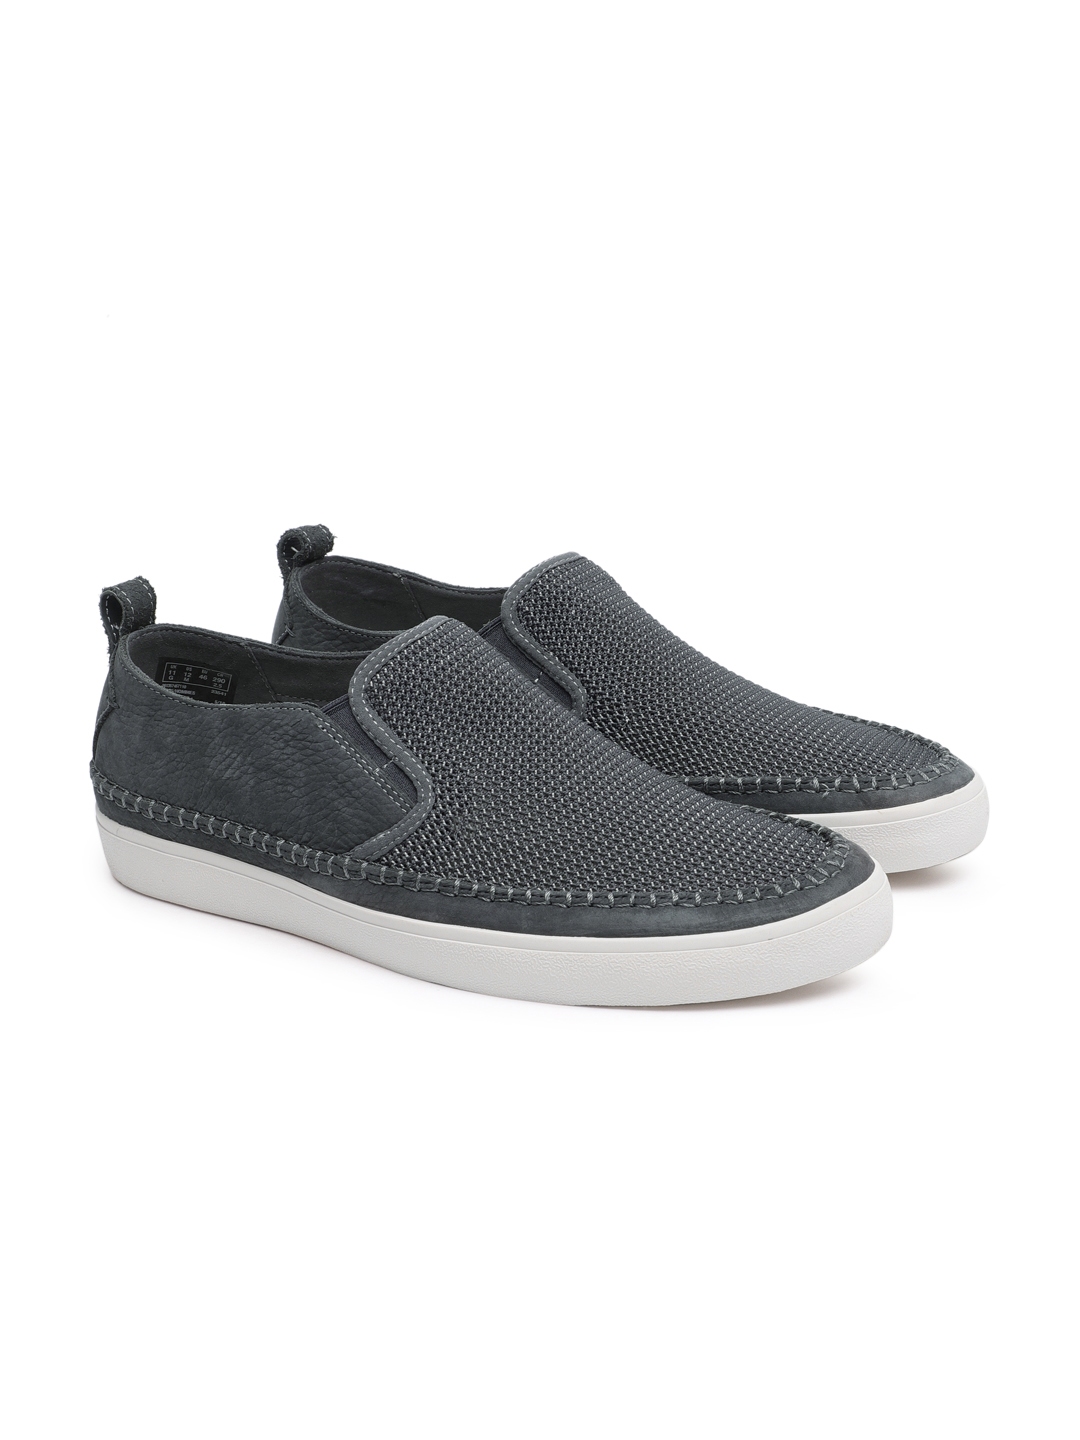 Buy Clarks Men Grey Slip On Sneakers - Casual Shoes for Men 7713793 ...